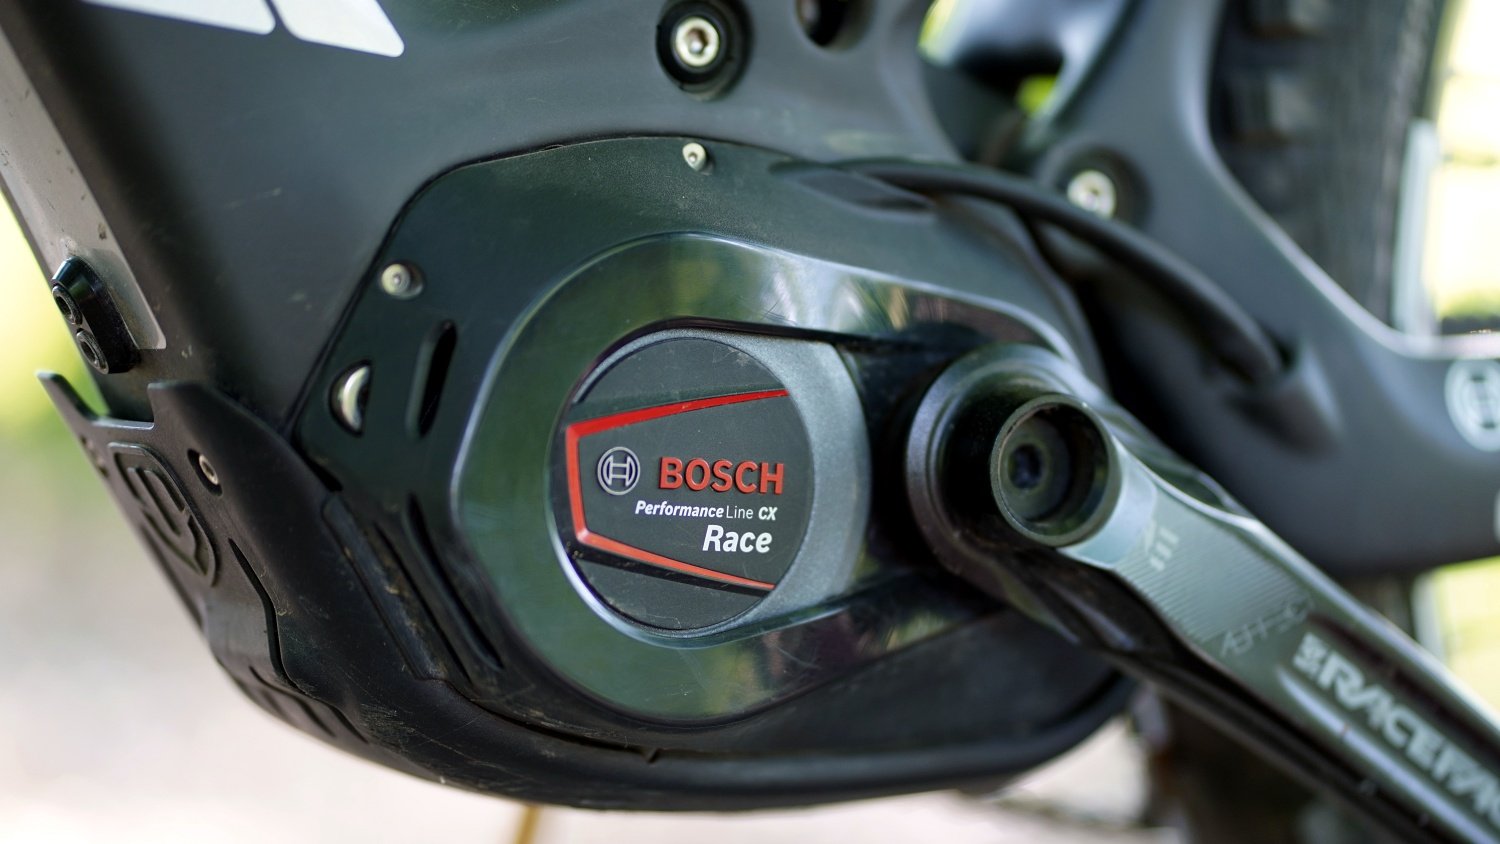 Bosch Performance CX Race - Powerful and versatile